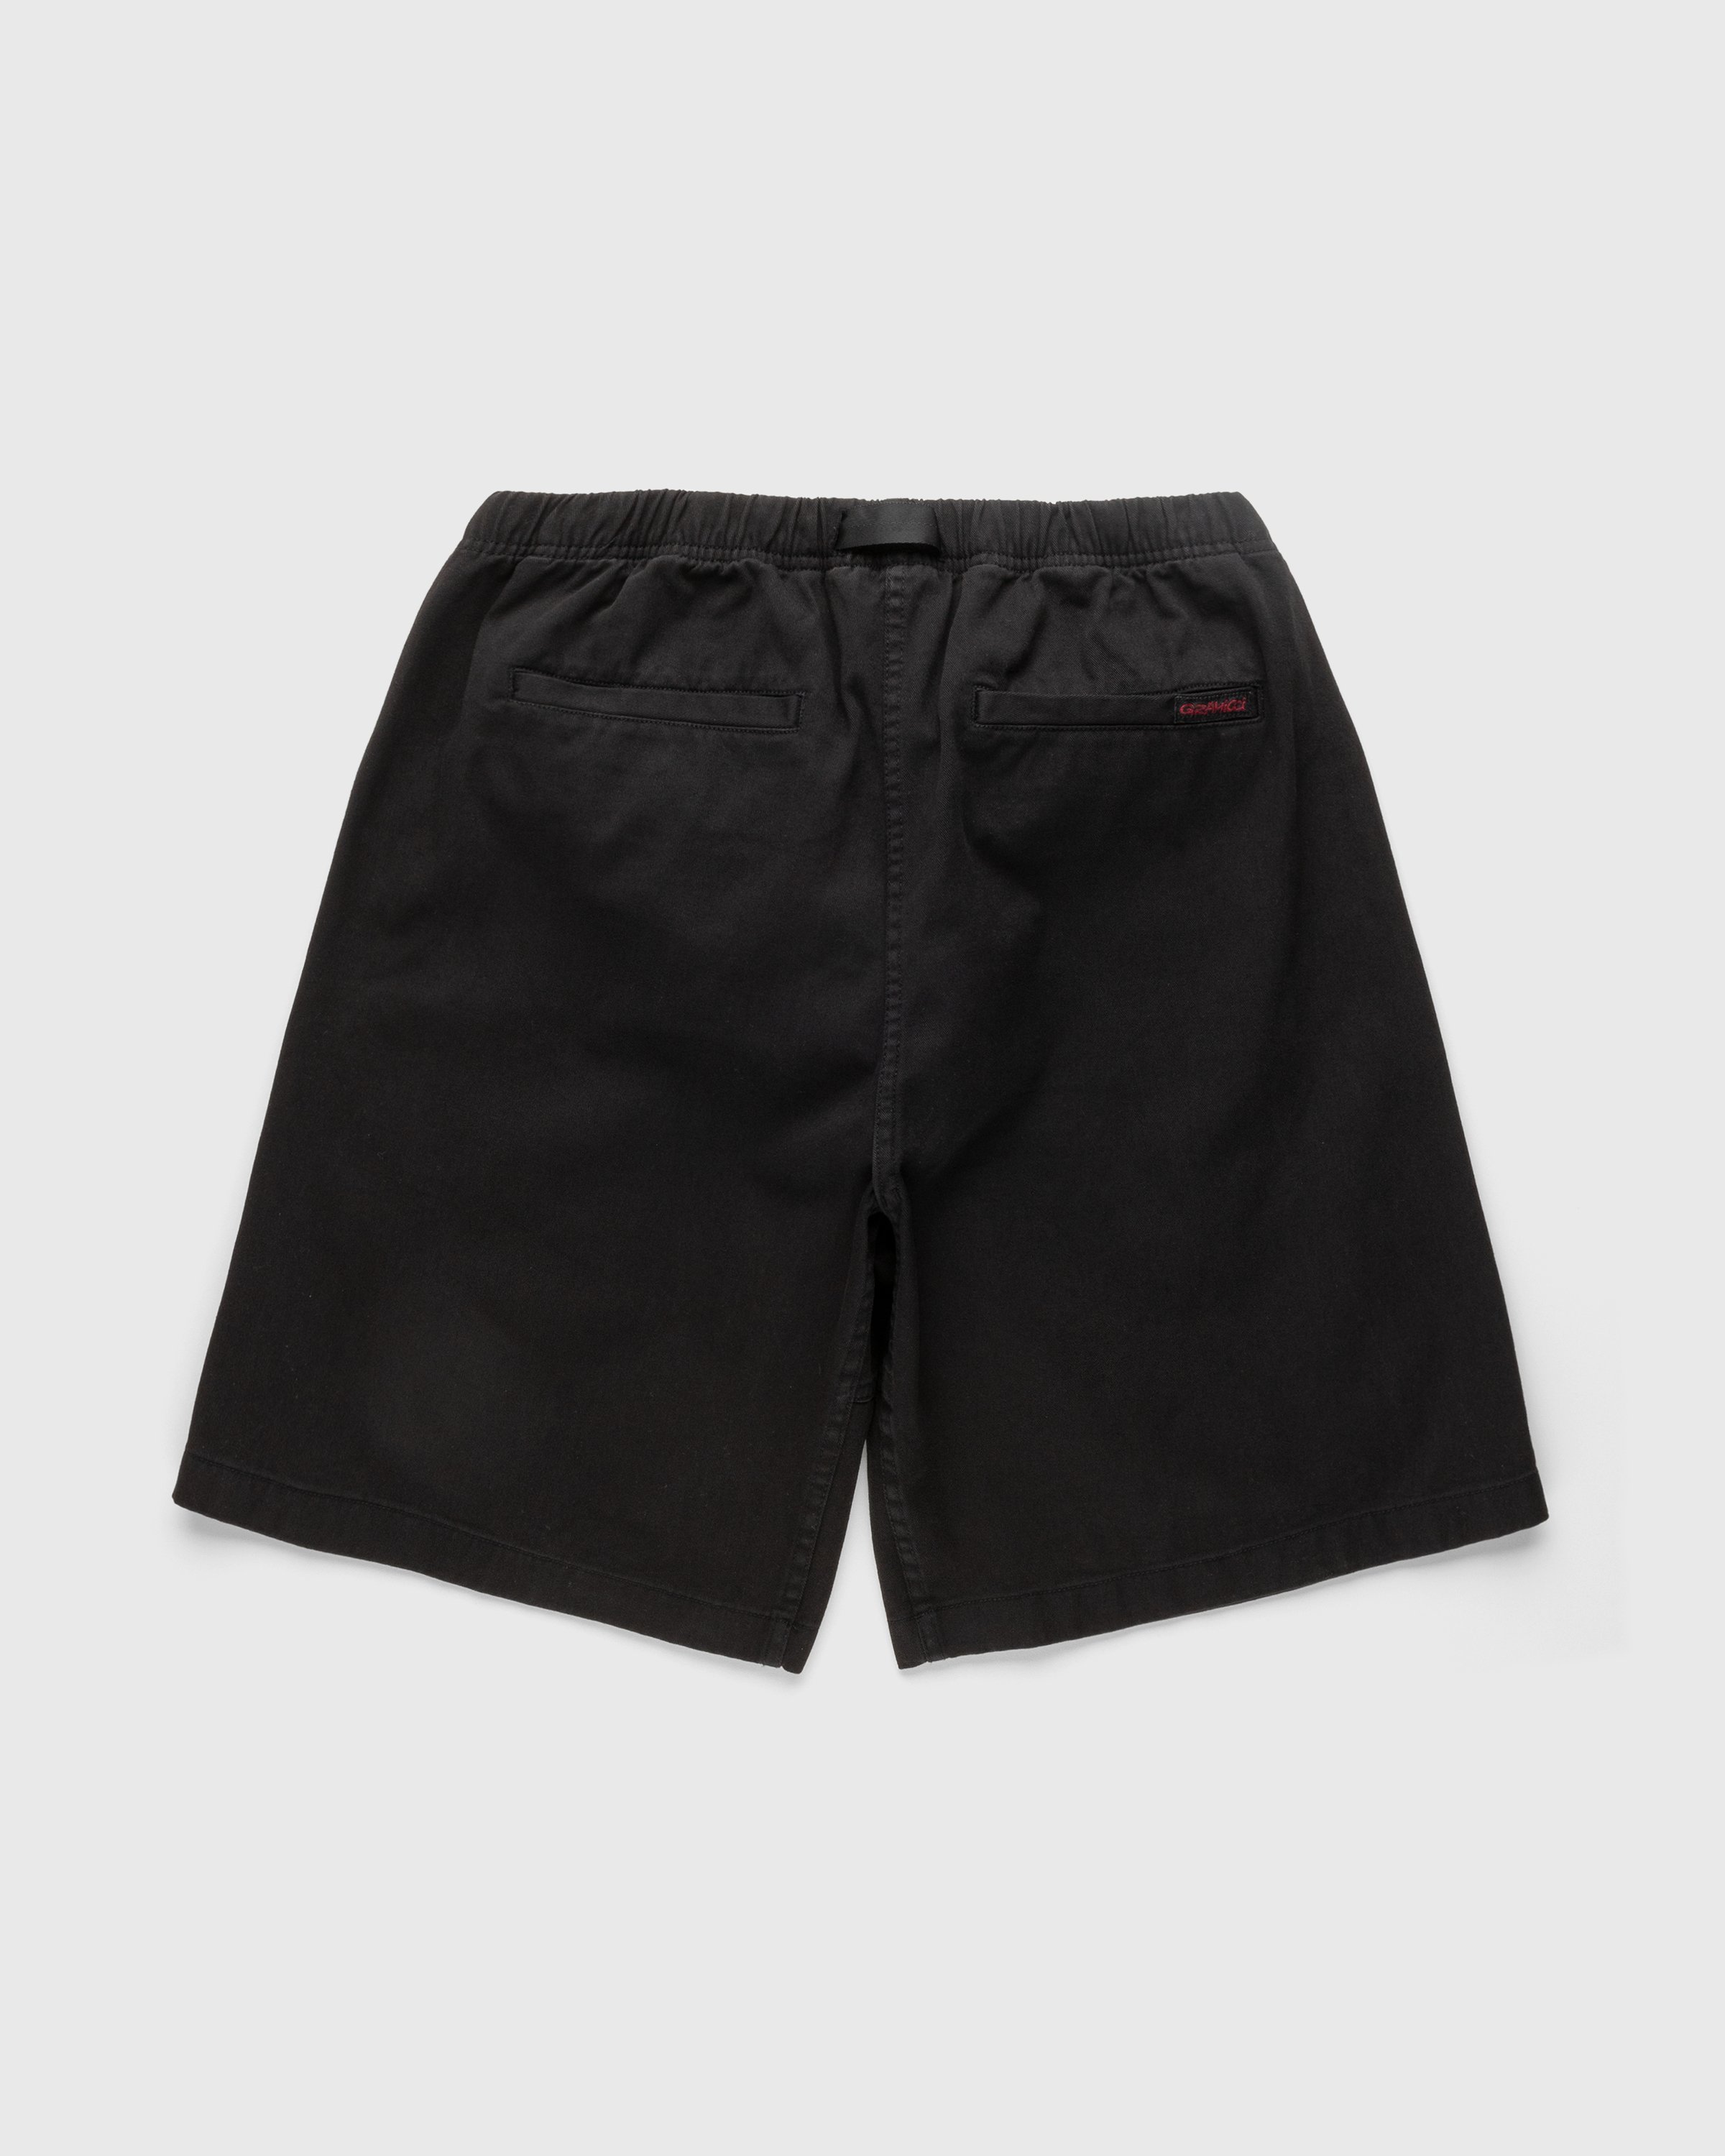 Gramicci - G-Shorts Black - Clothing - Black - Image 2